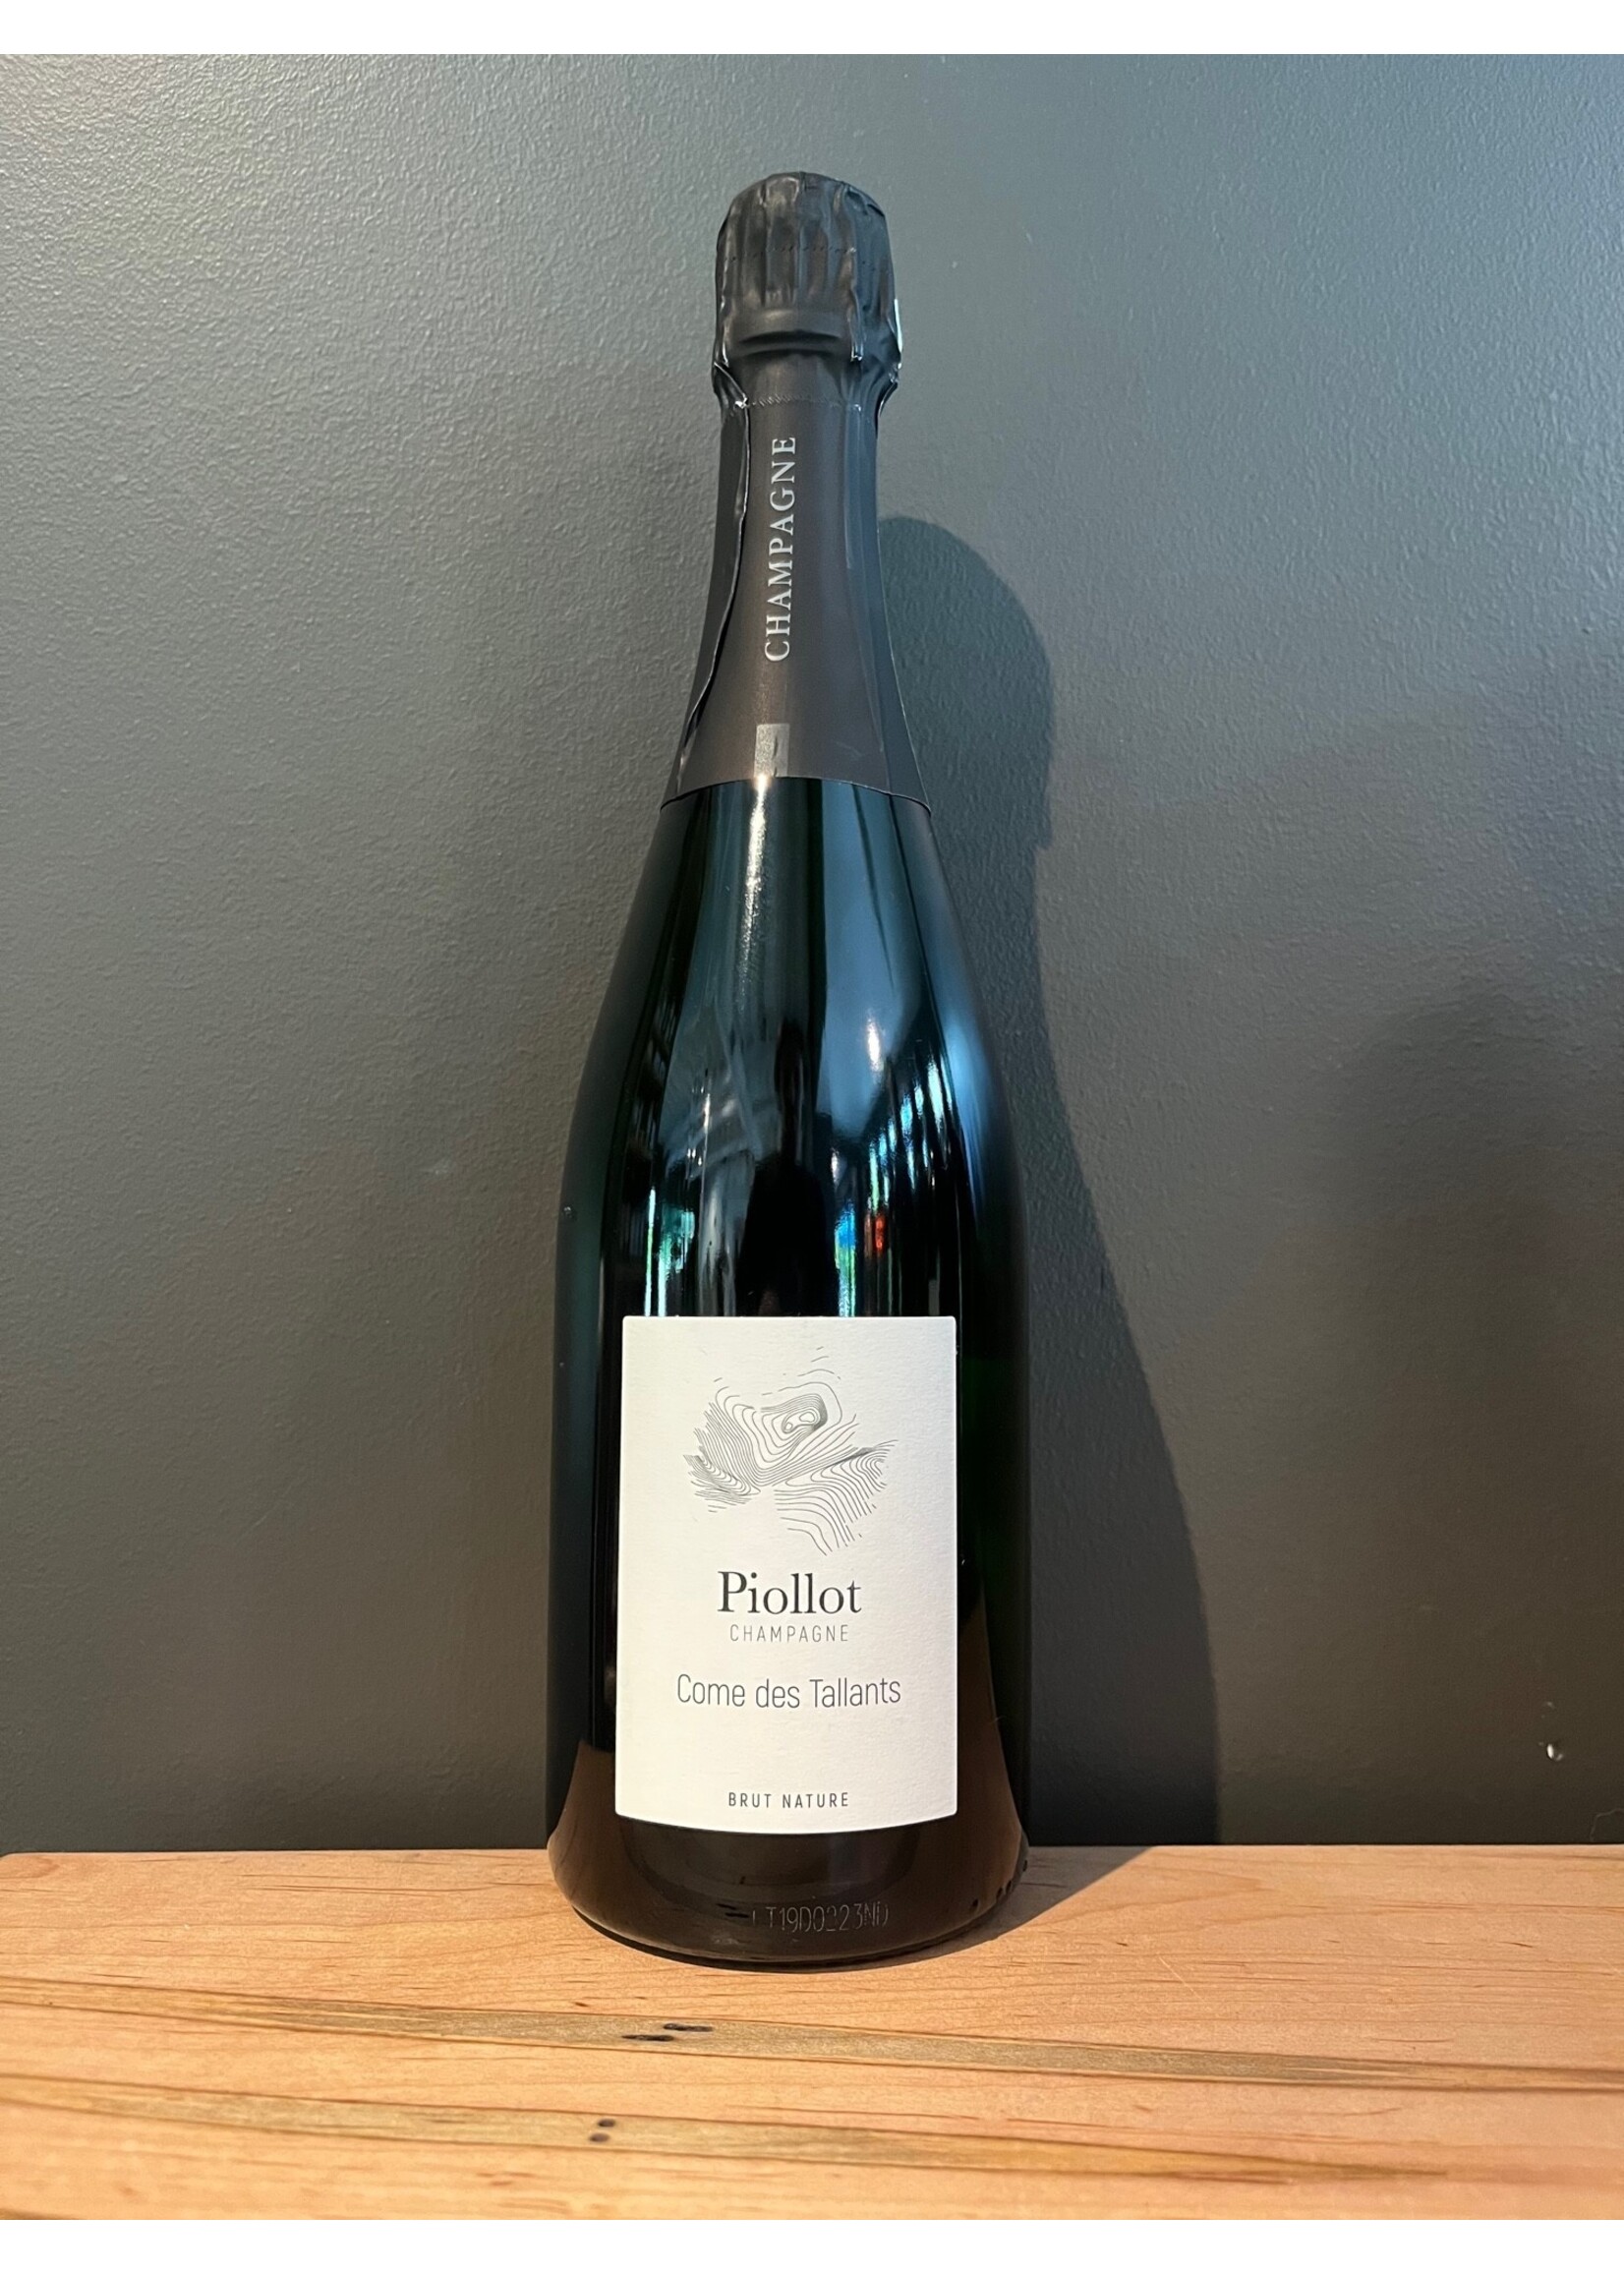 Skurnik Wines Piollot - "Come does Tallants" Pinot Noir 2019